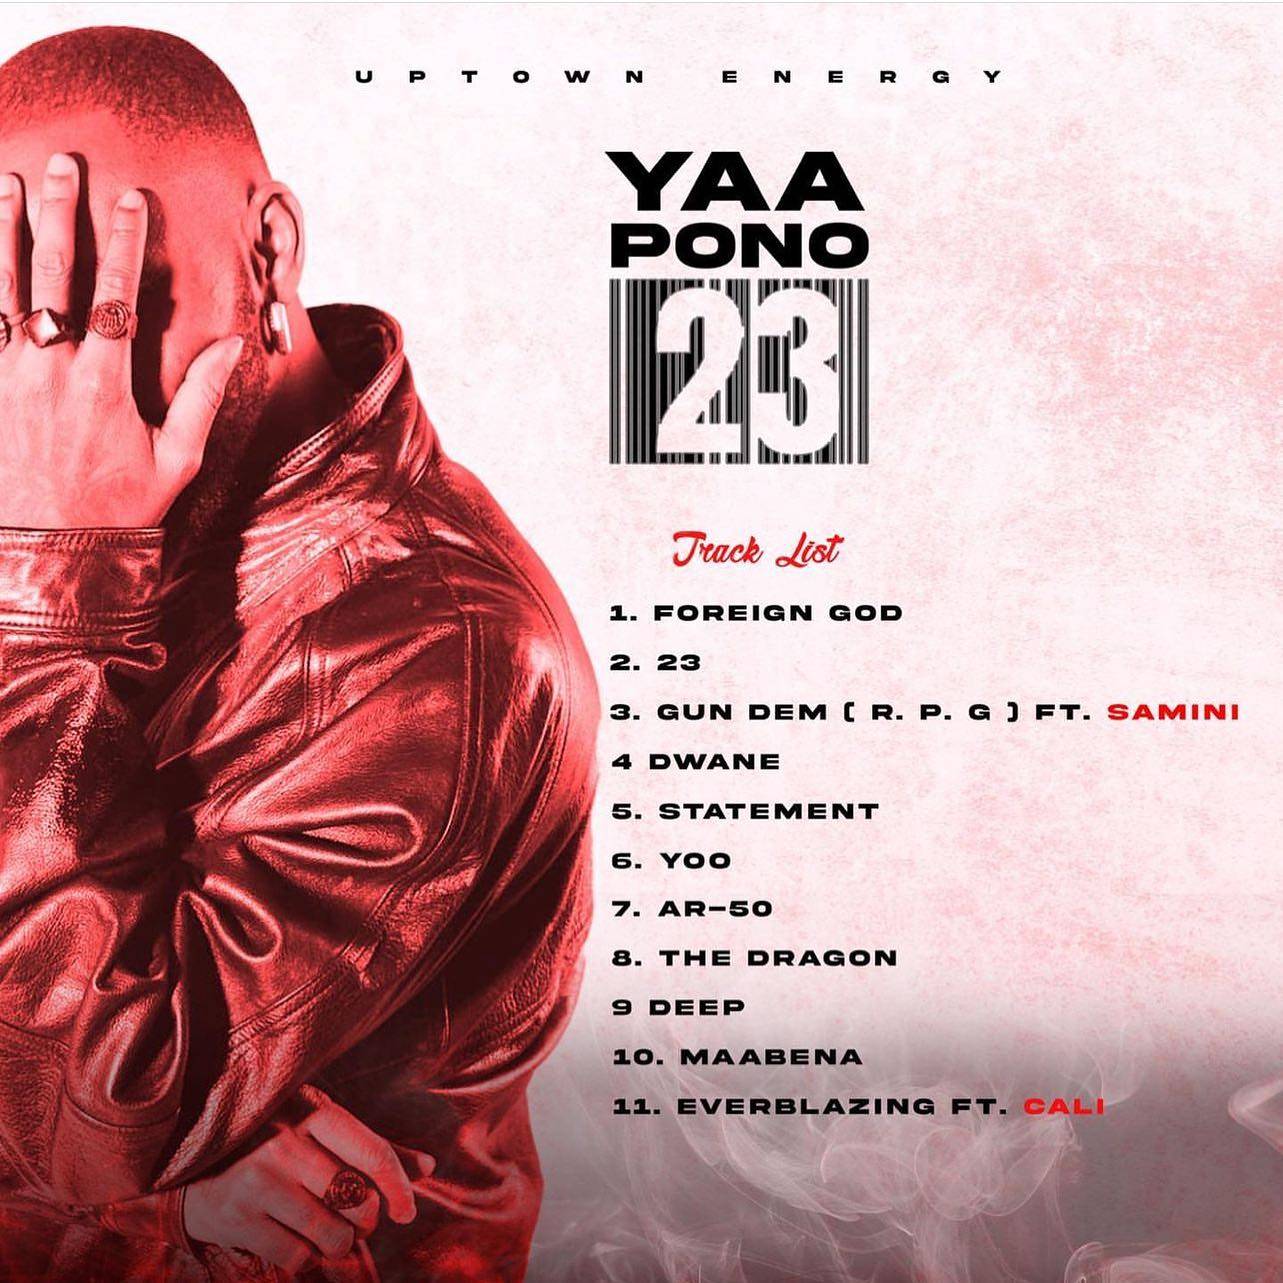 Yaa Pono - The Dragon MP3 Download